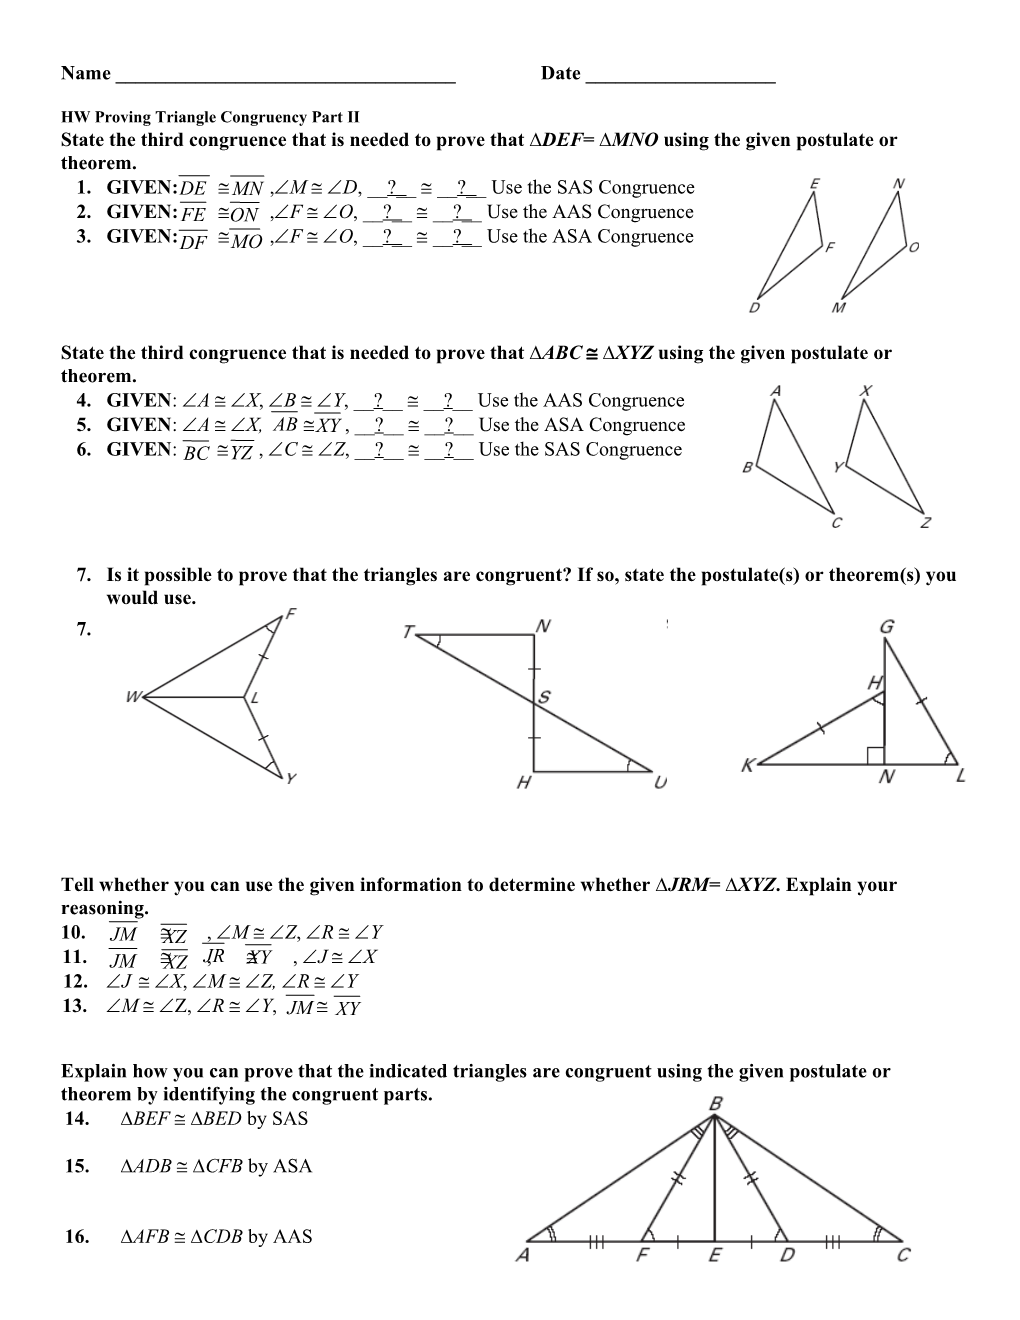 HW Proving Triangle Congruency Part II